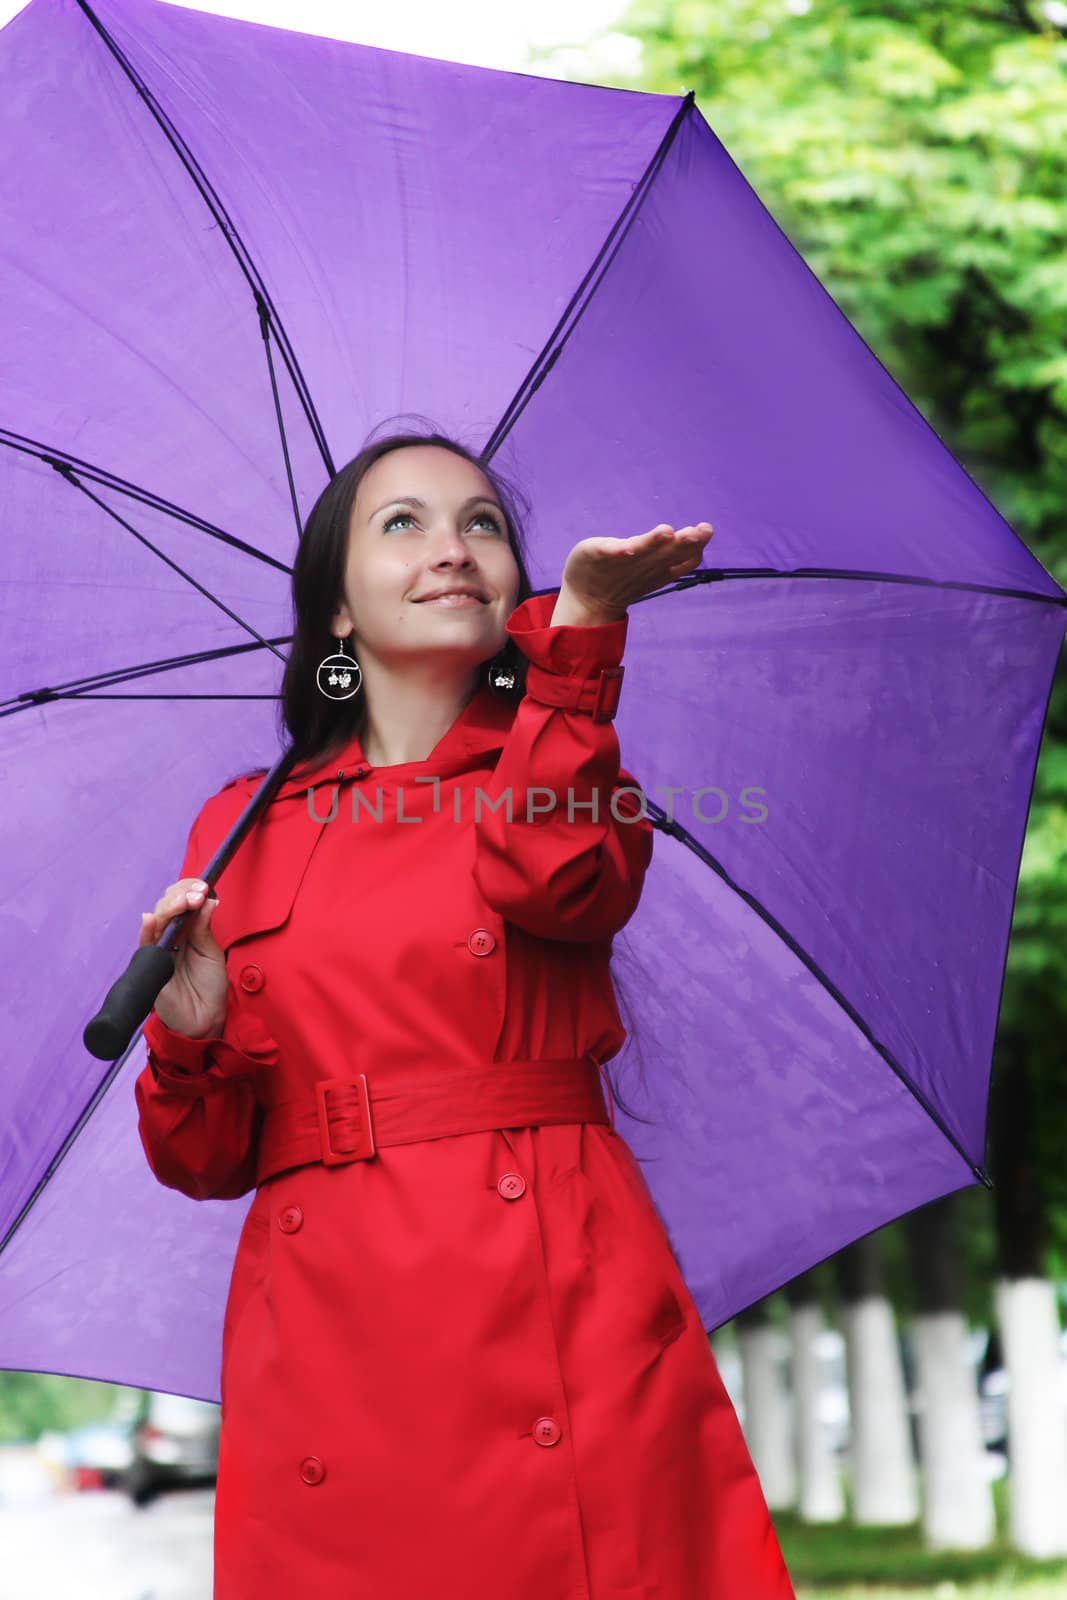 Happy woman with umbrella catching rain drops